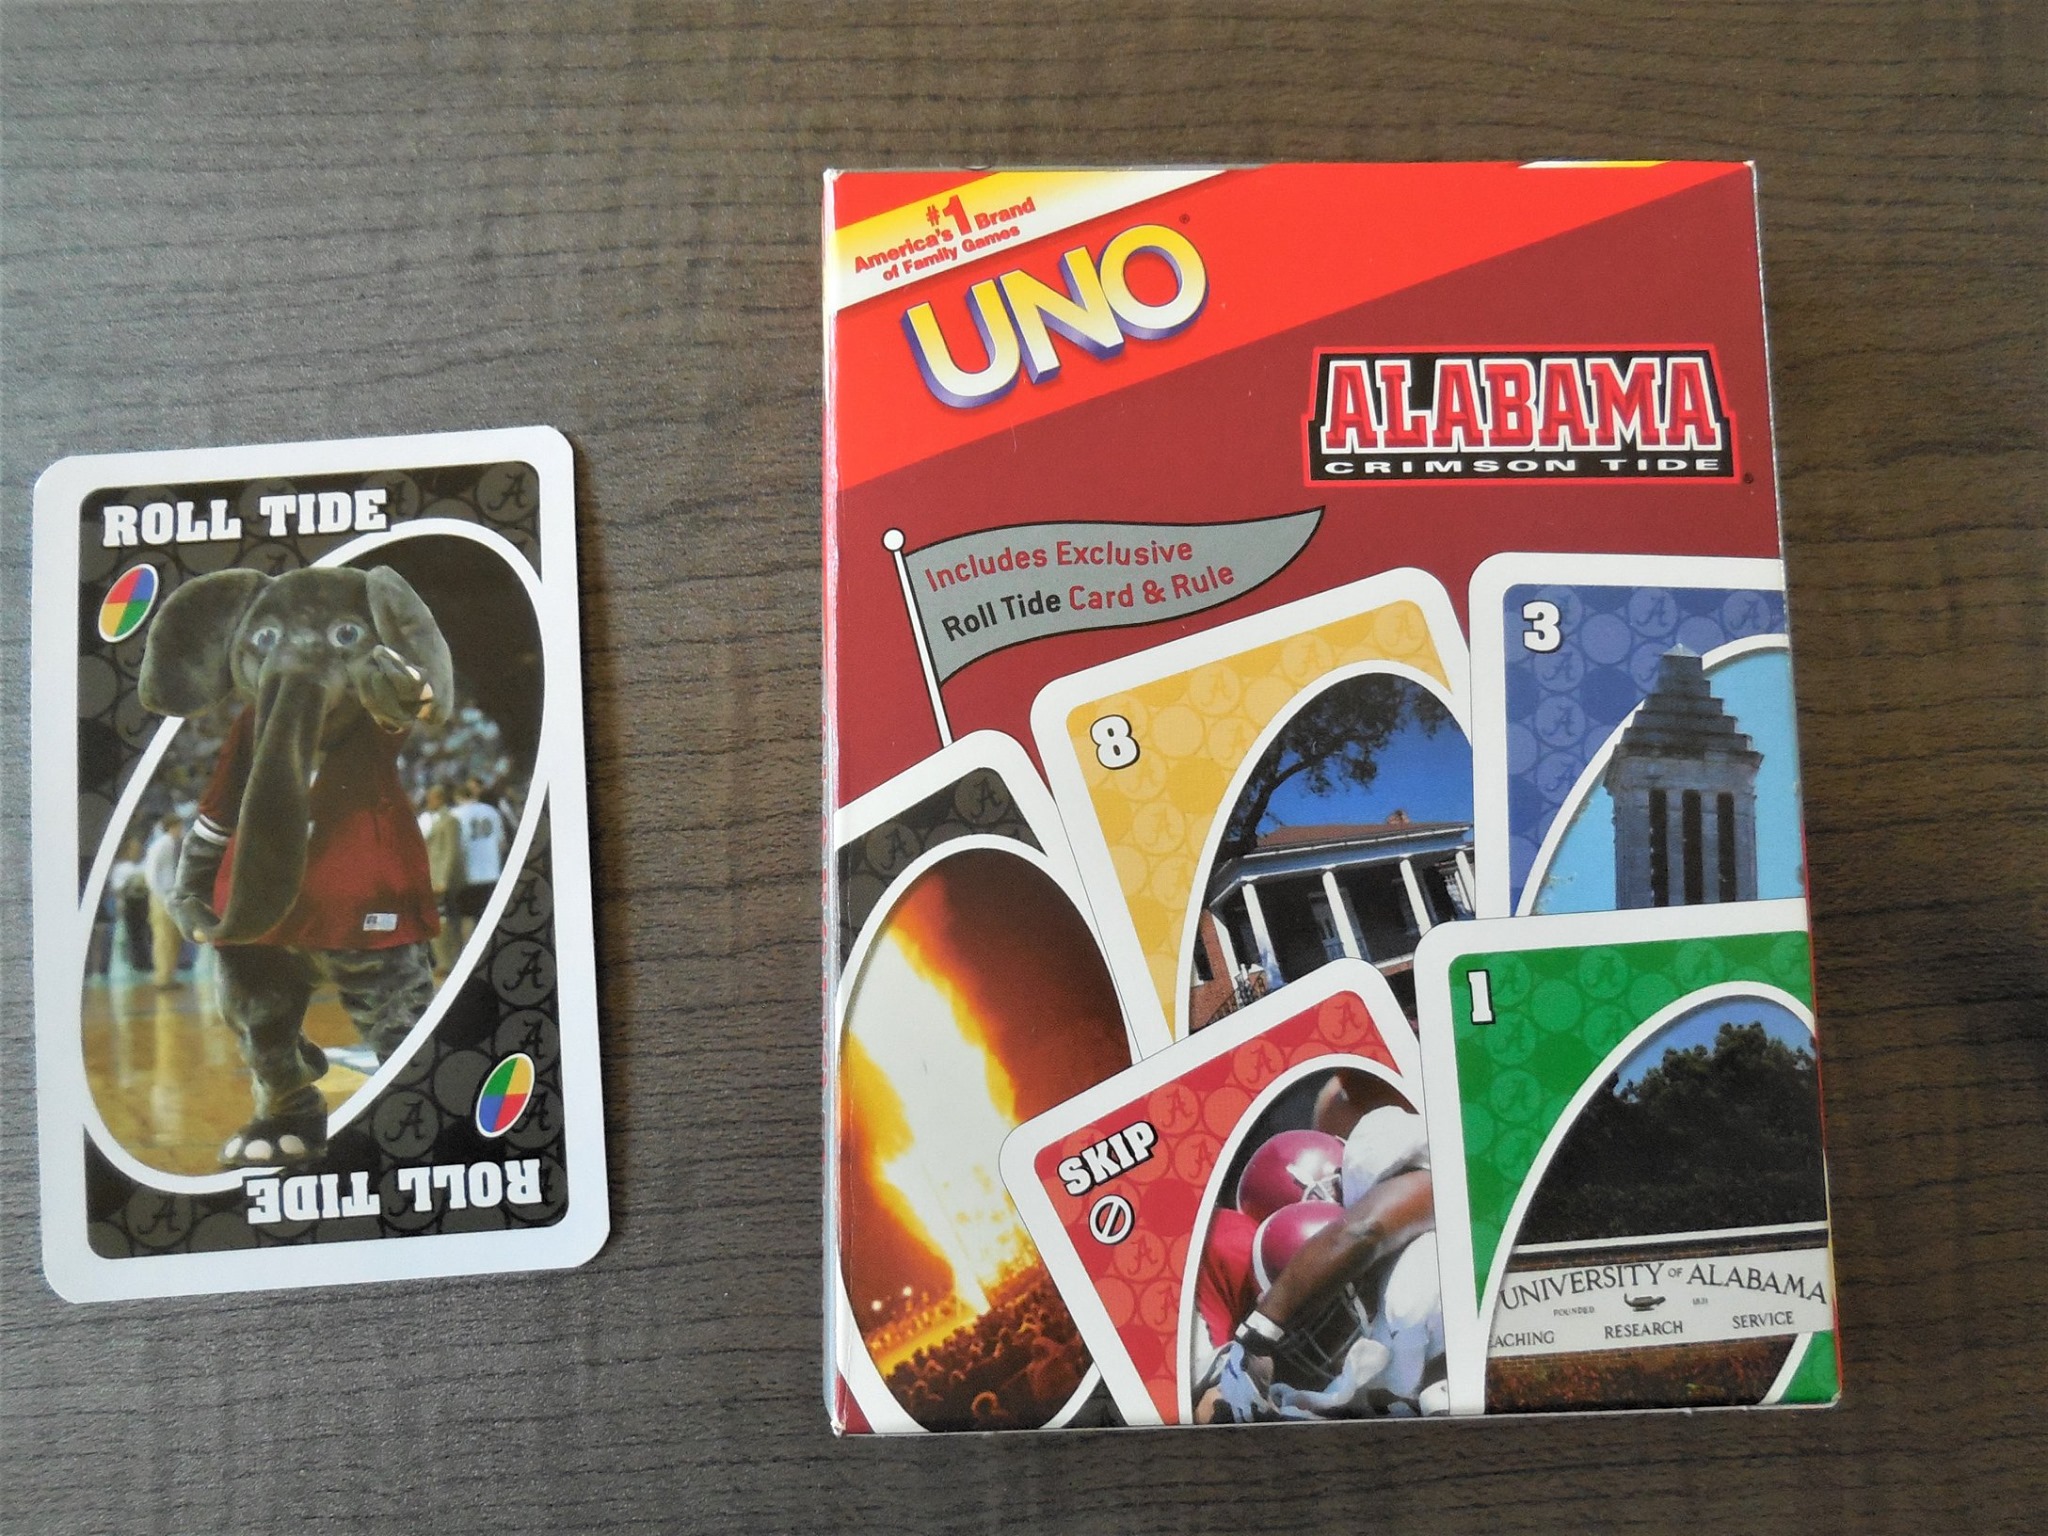 University of Alabama Uno Card Game